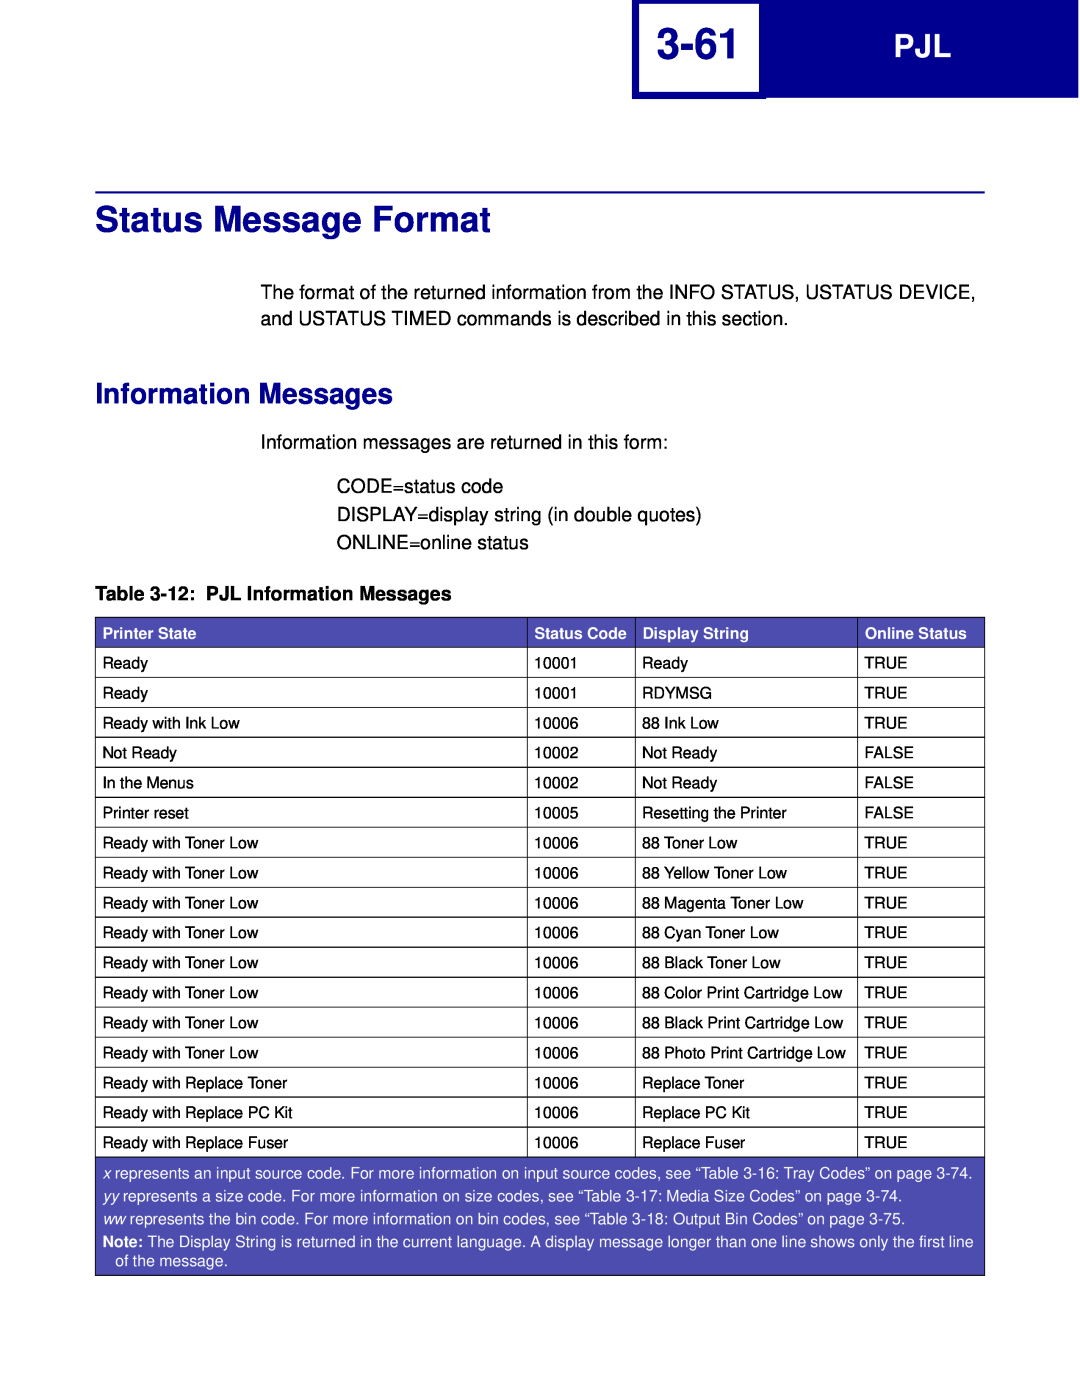 Lexmark C760, C762 manual 3-61, Status Message Format, 12 PJL Information Messages 